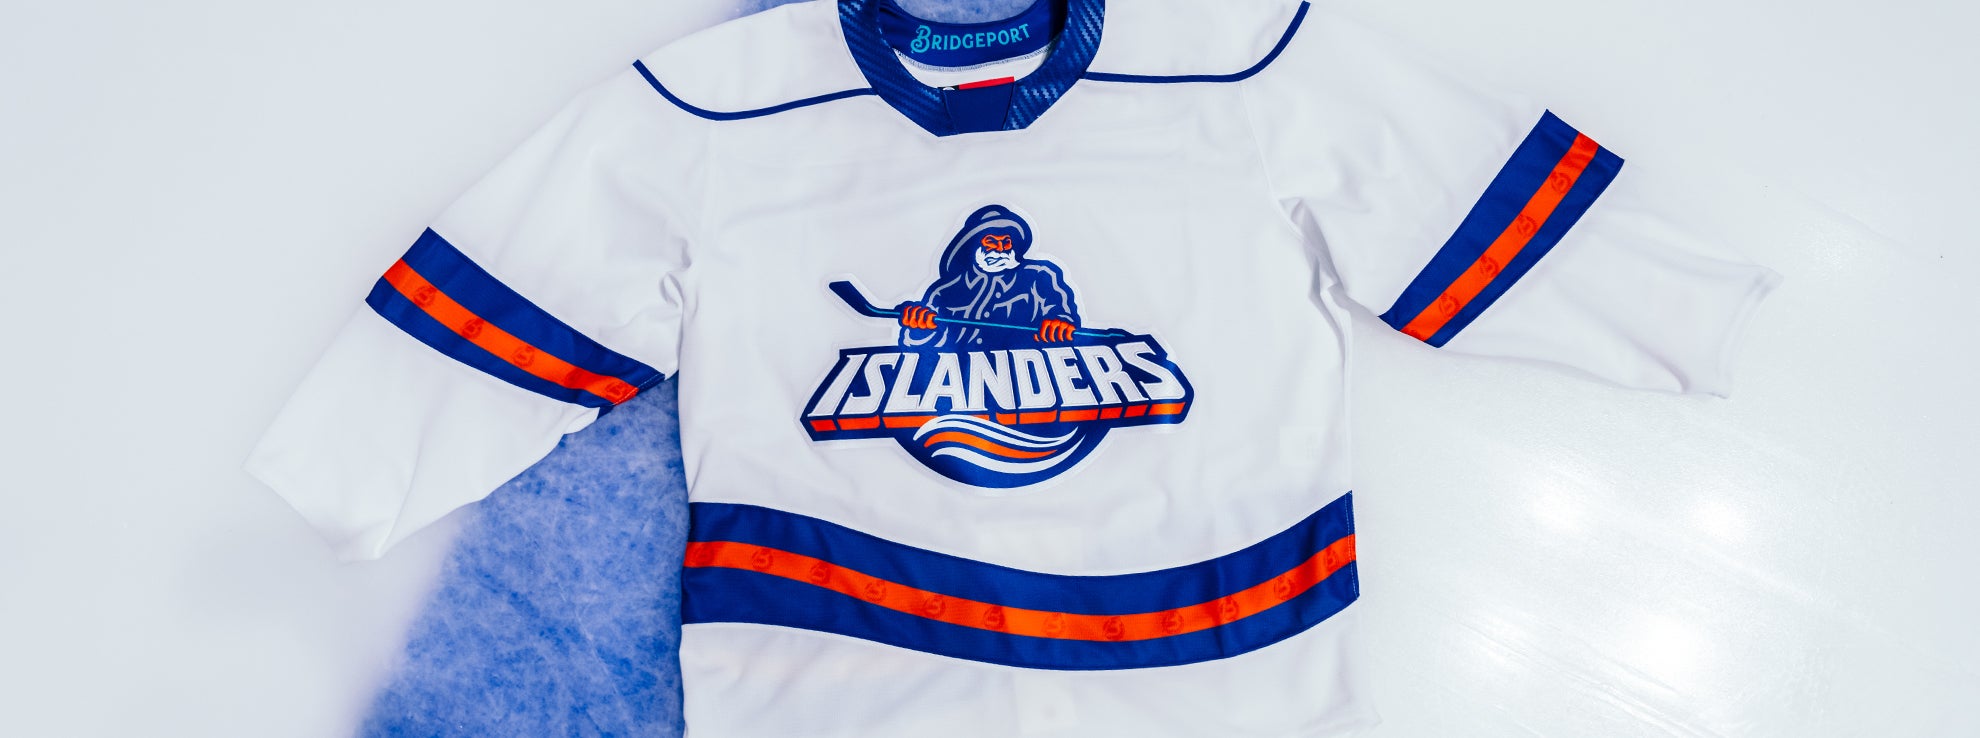 Authentic New York Islanders Jerseys, Isles Lab